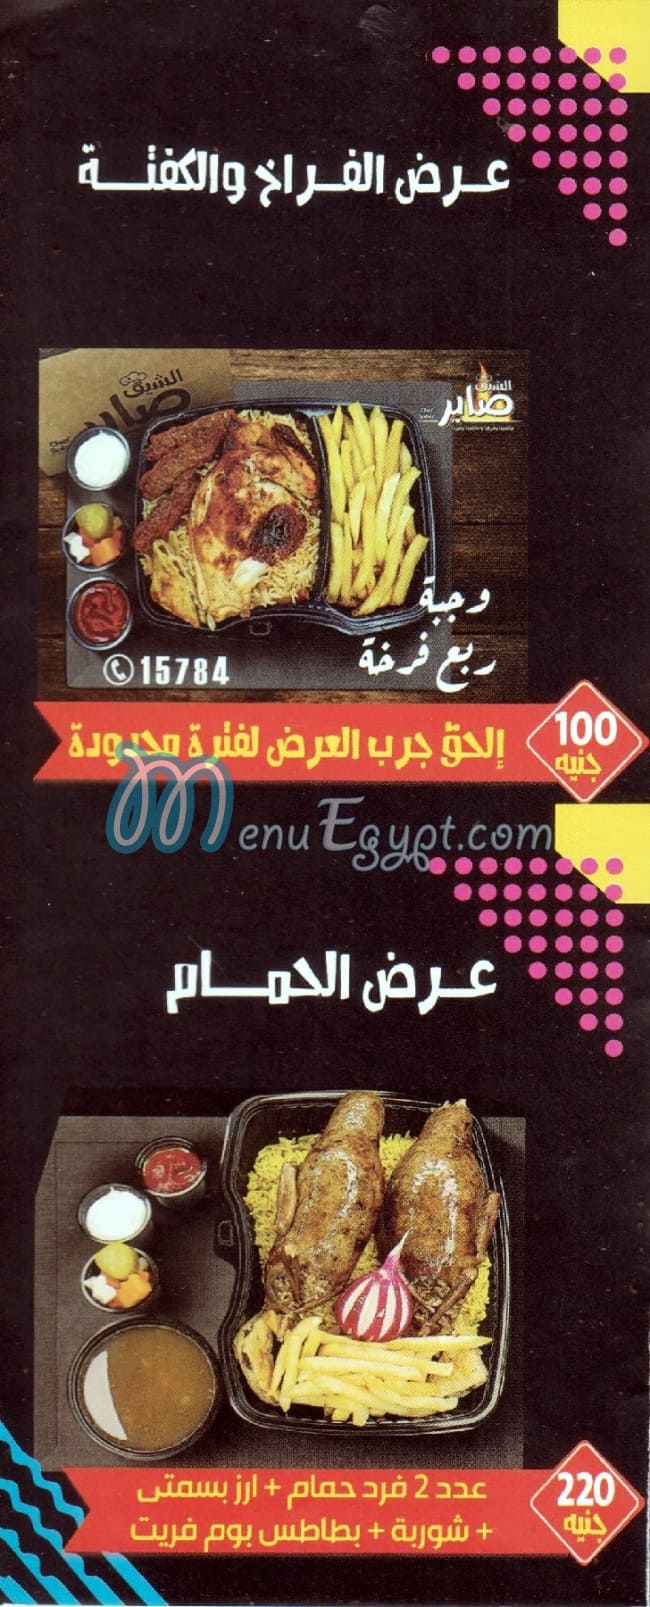 Chef Saber menu prices